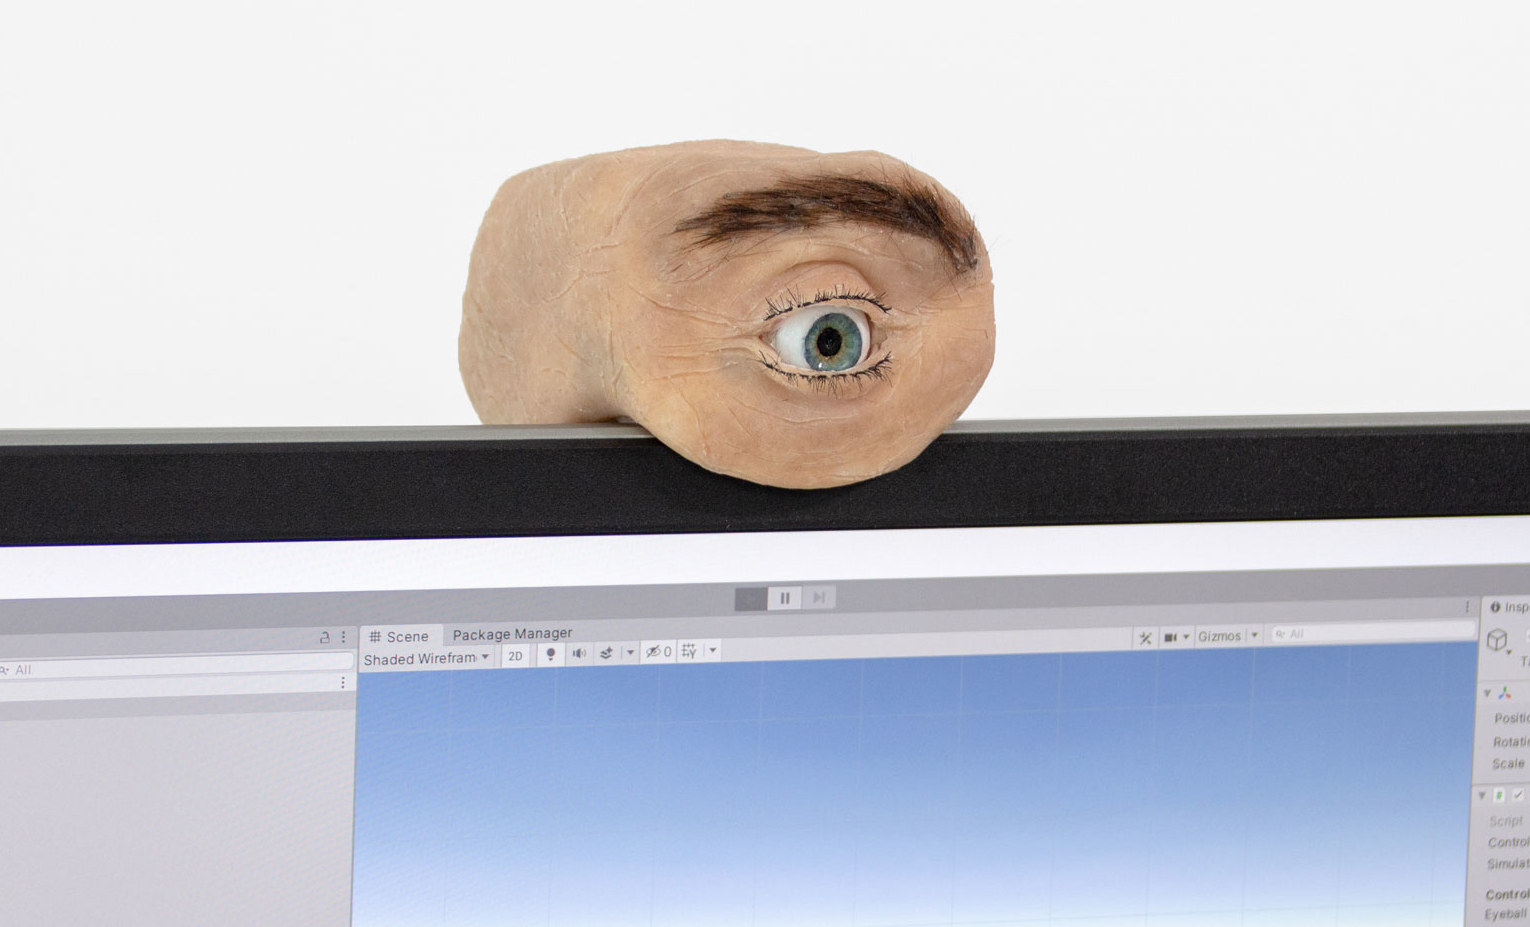 Eyecam eye-shaped webcam